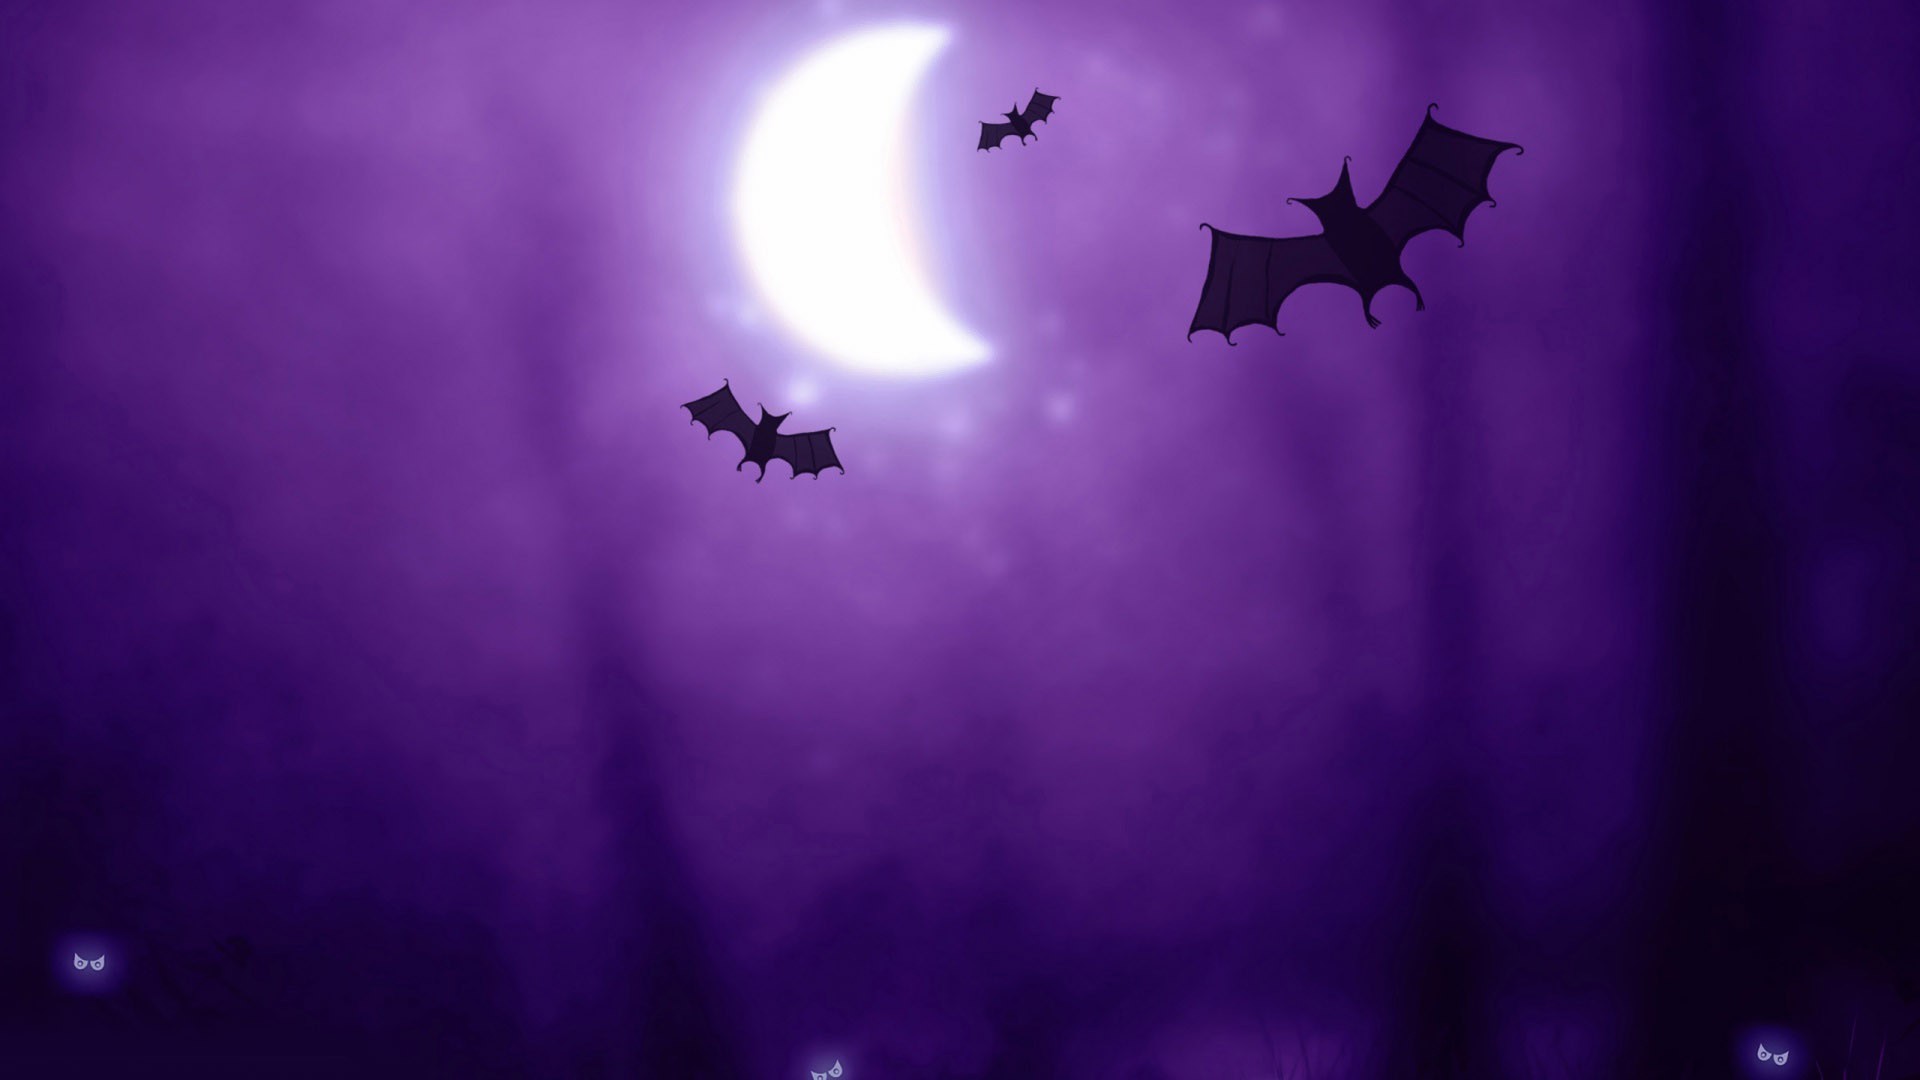 1920x1080 Bats in the purple night wallpaper 10848 